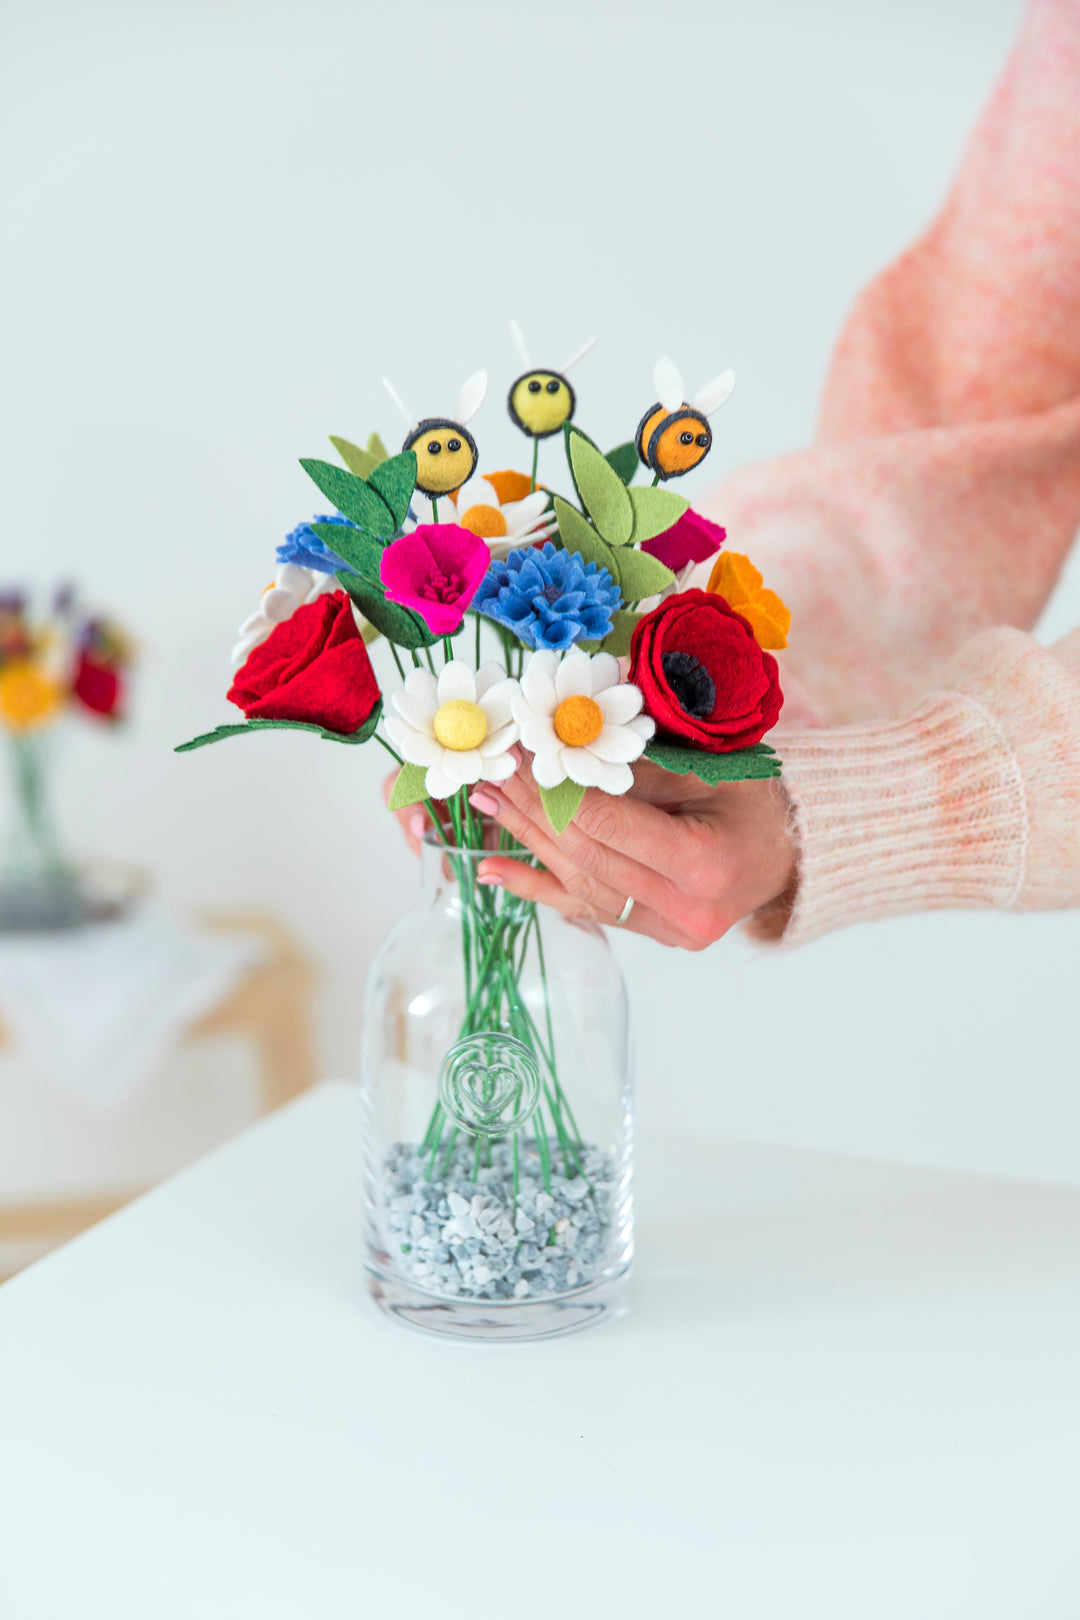 BLOG – The Handmade Florist